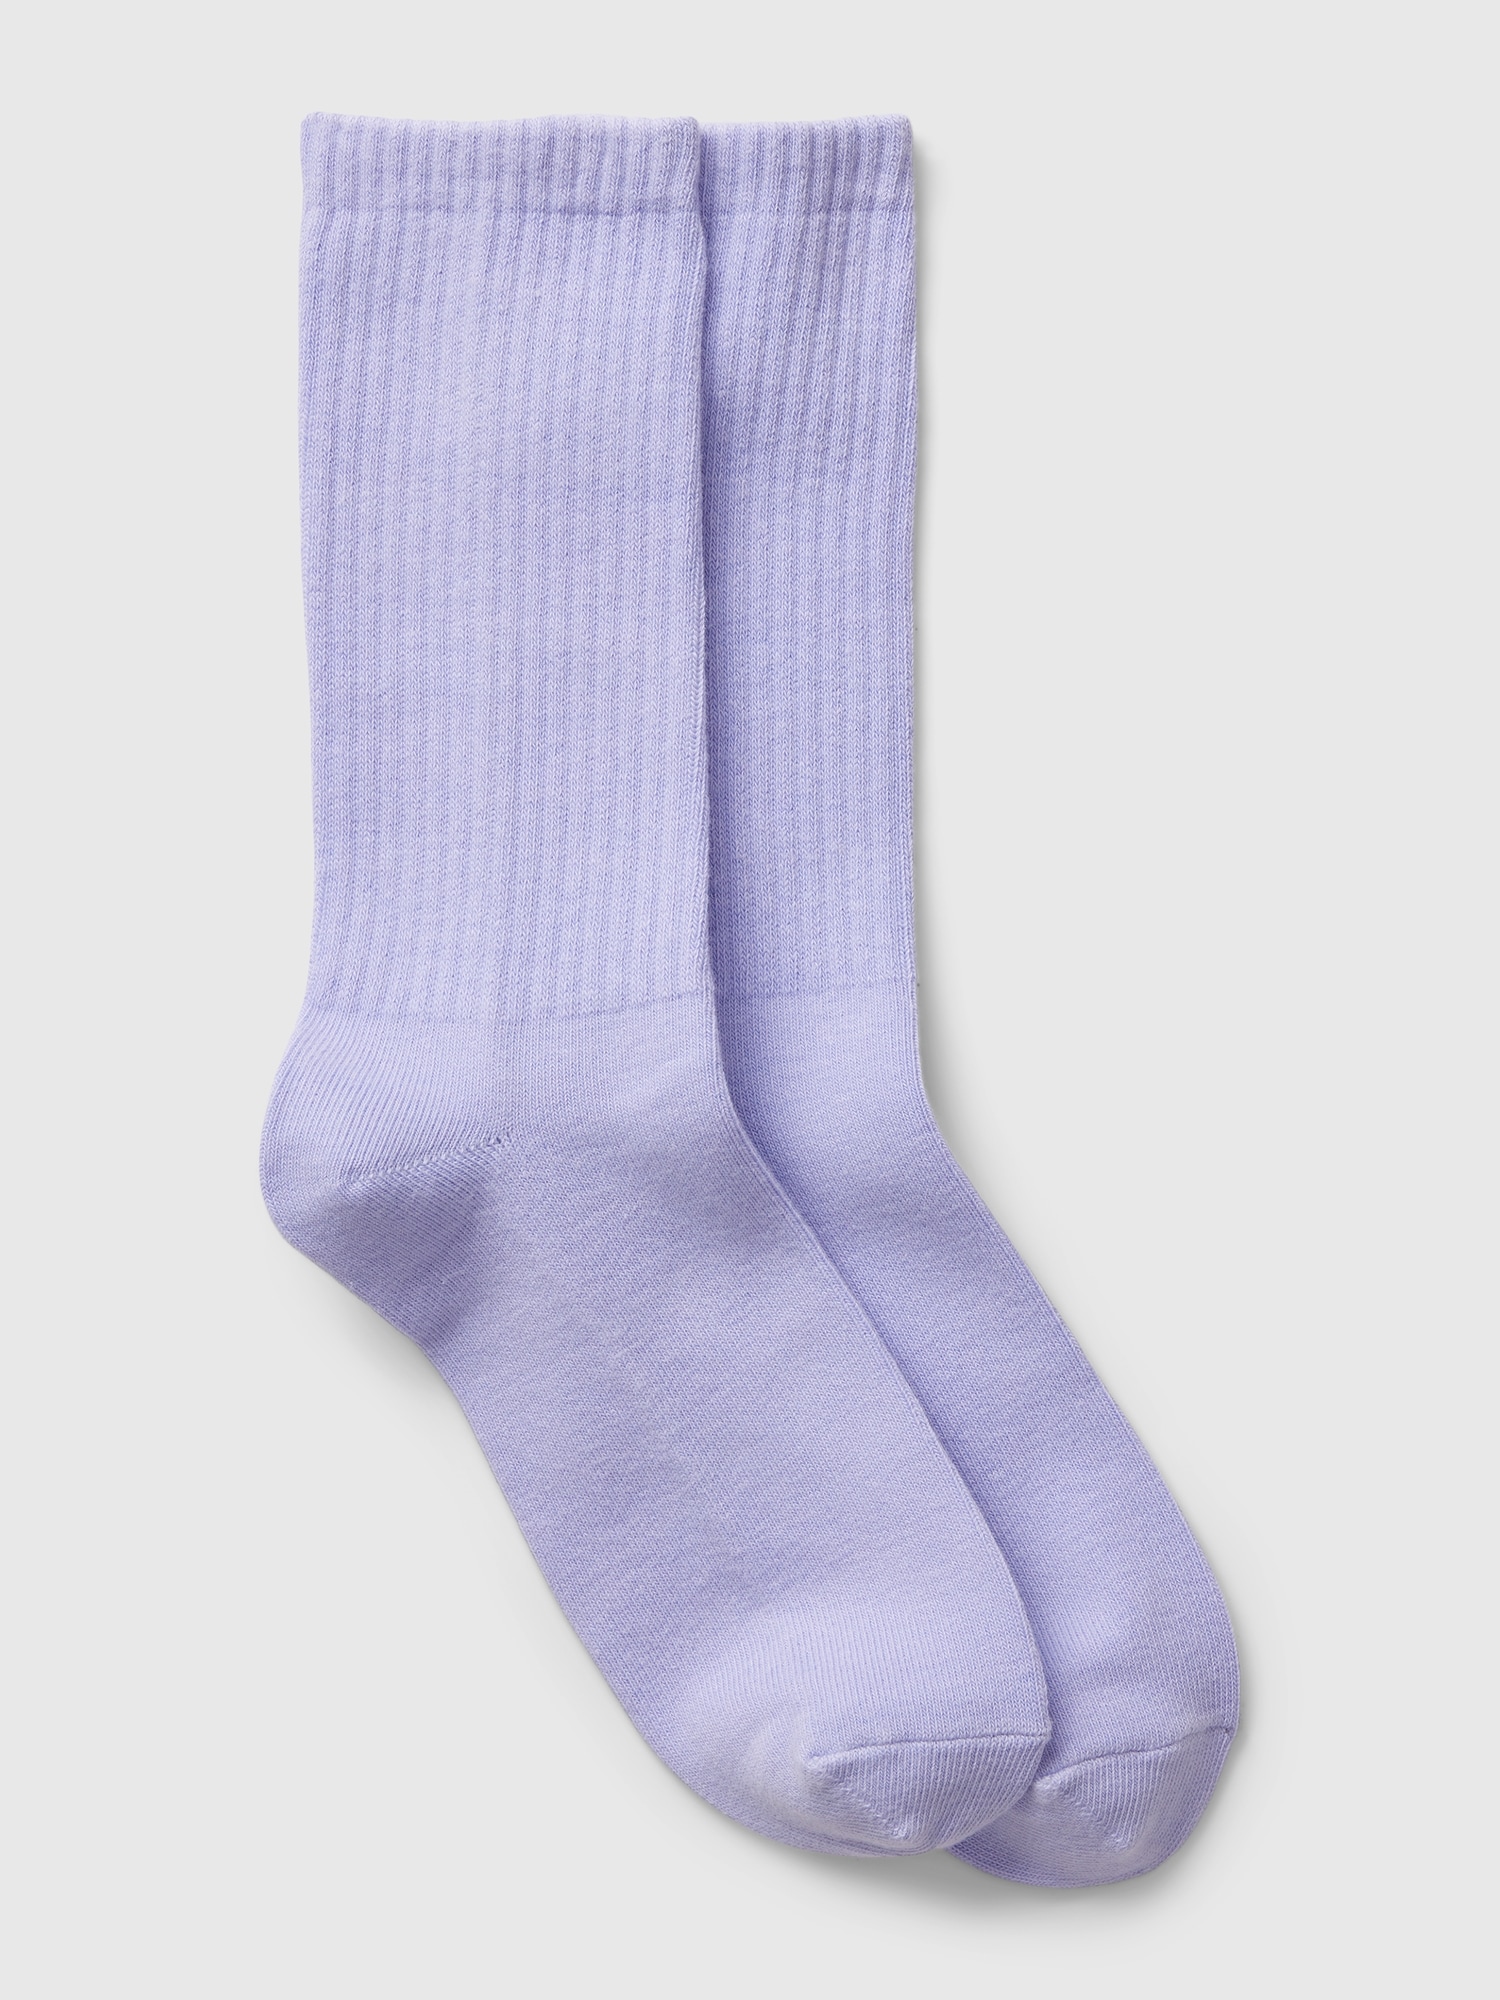 Gap Cotton Crew Socks In Fresh Lavender